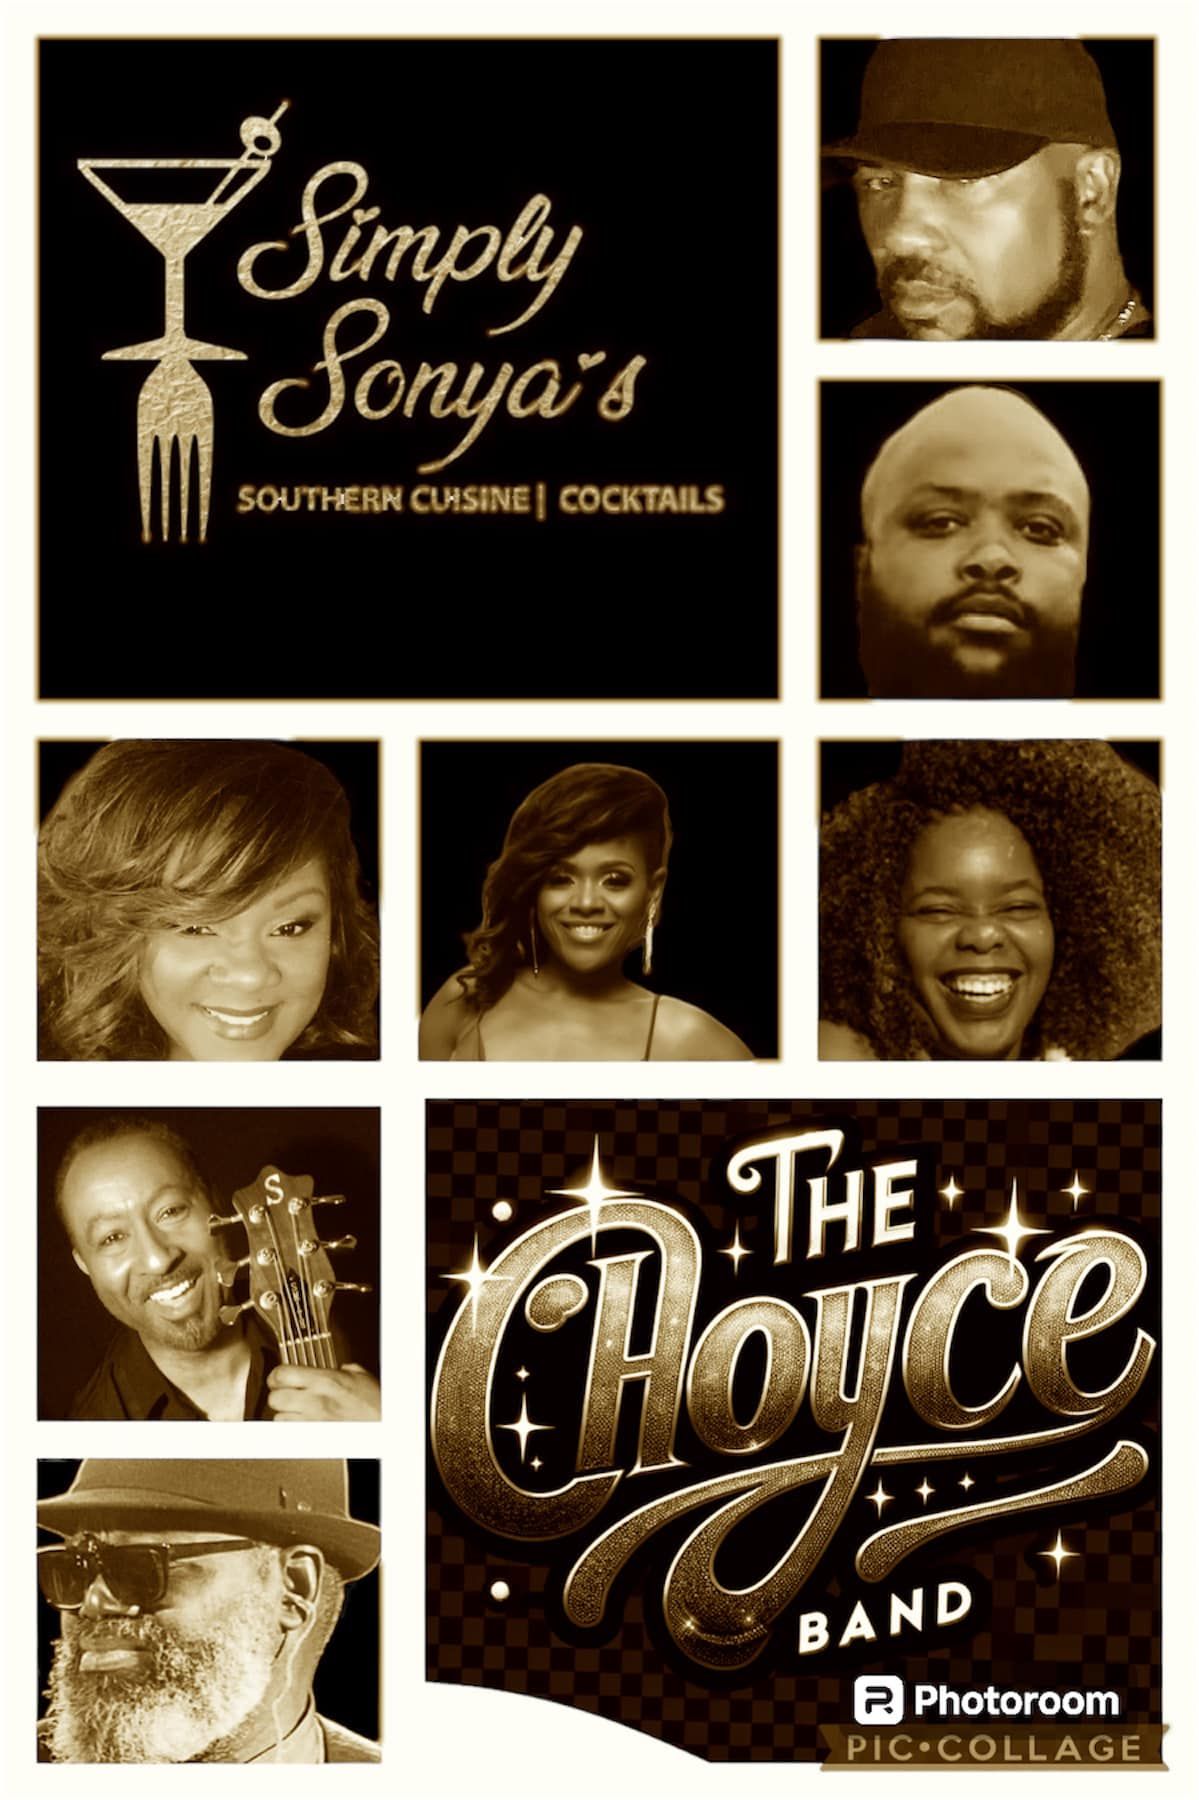 The Choyce Band @ Simply Sonya's